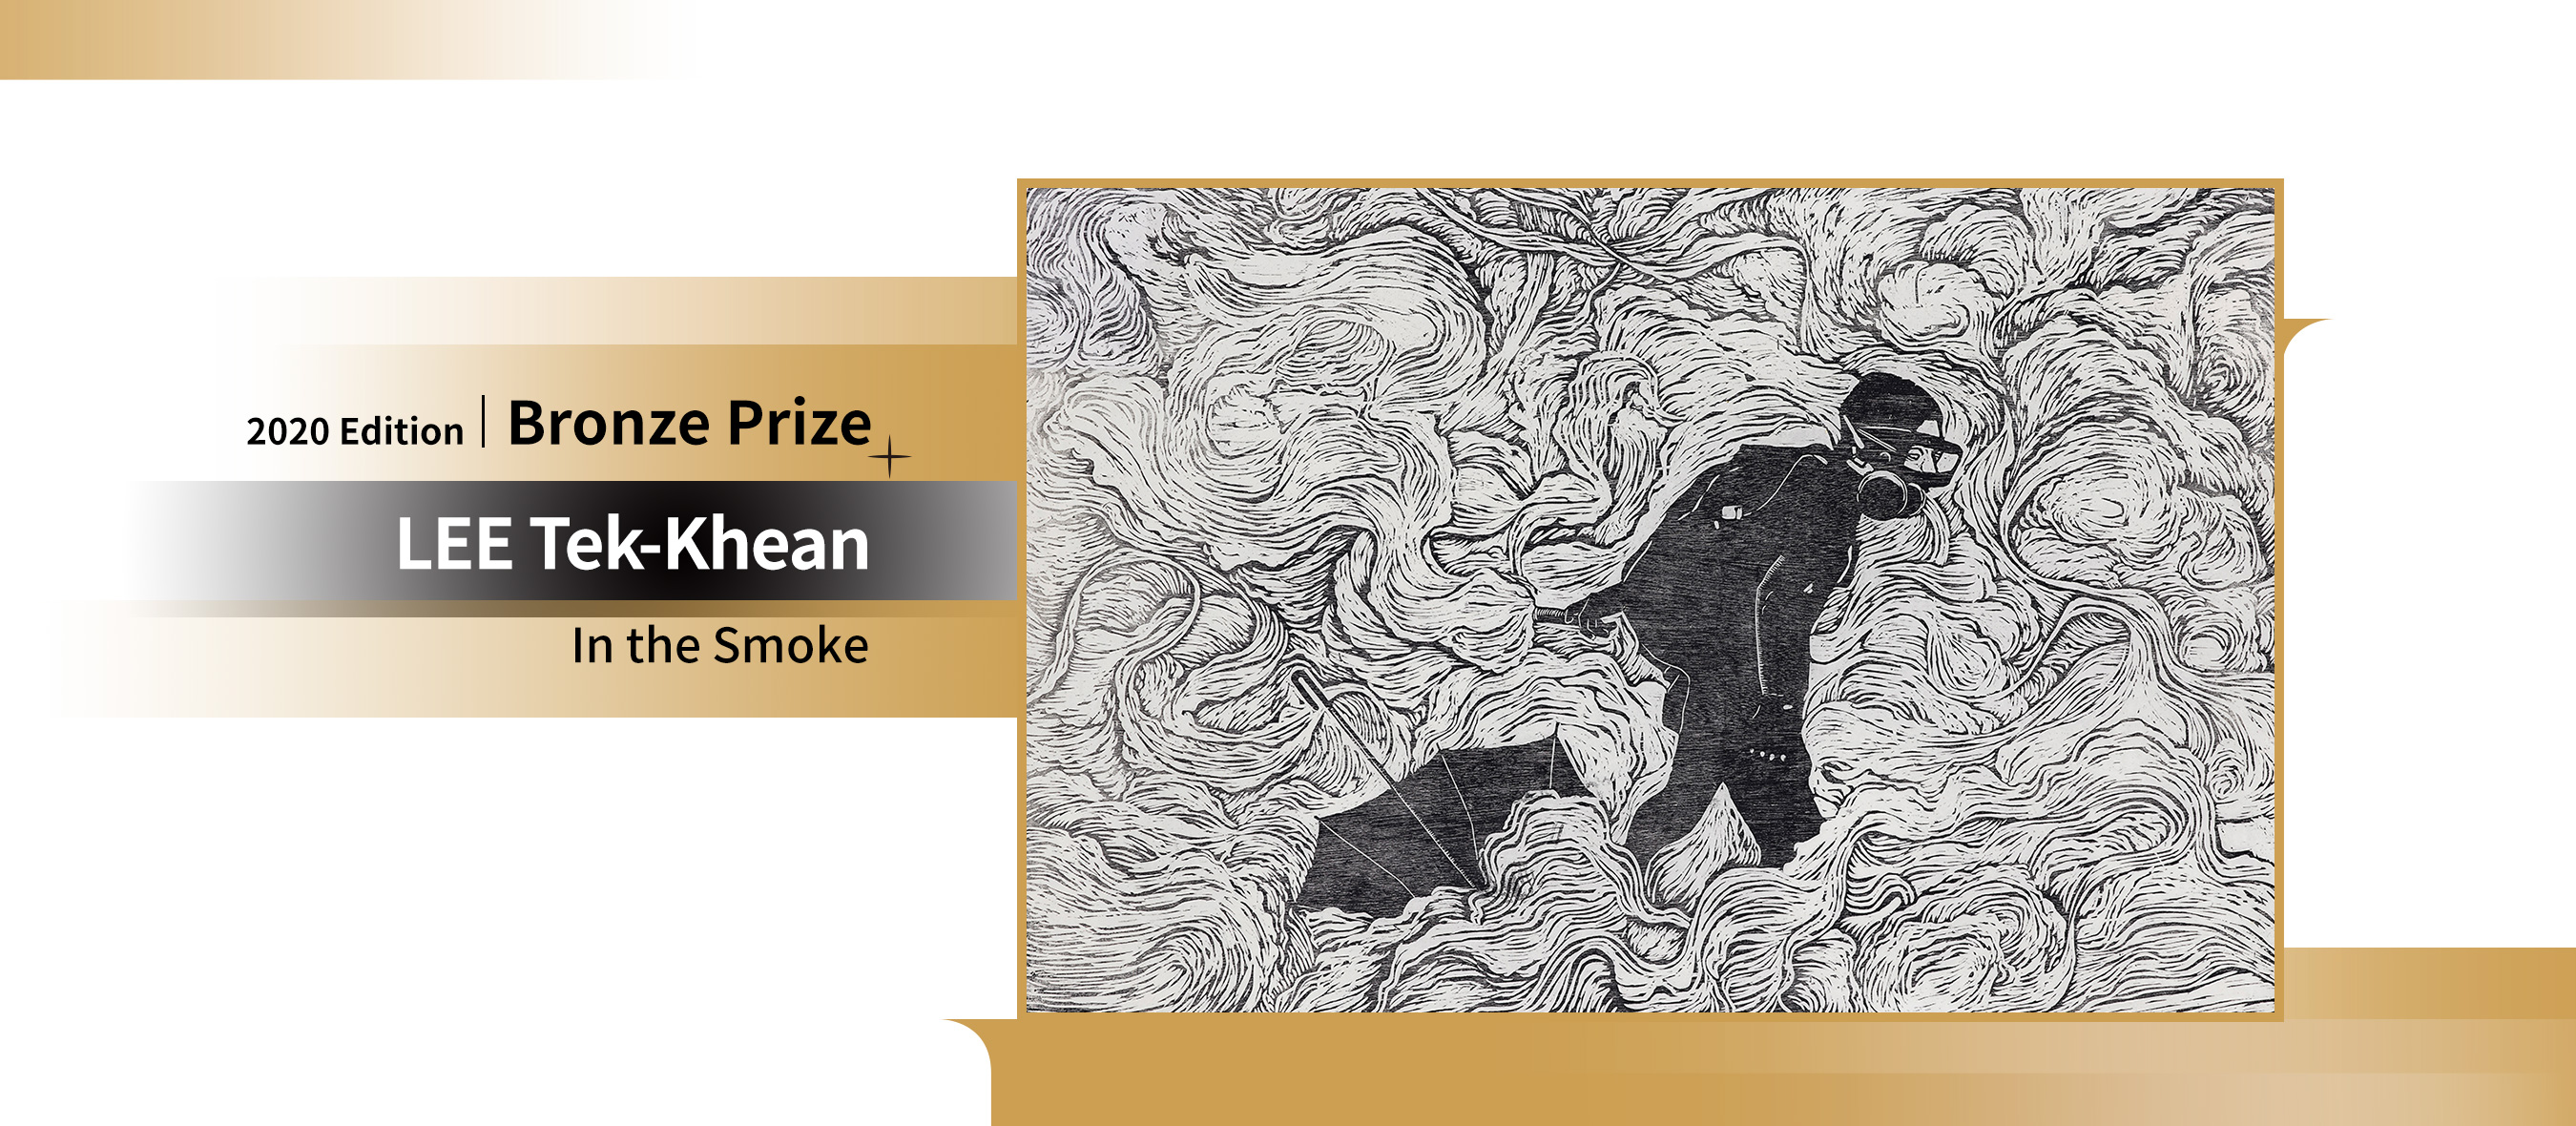 2020 Edition Bronze Prize,LEE Tek-Khean,In the Smoke